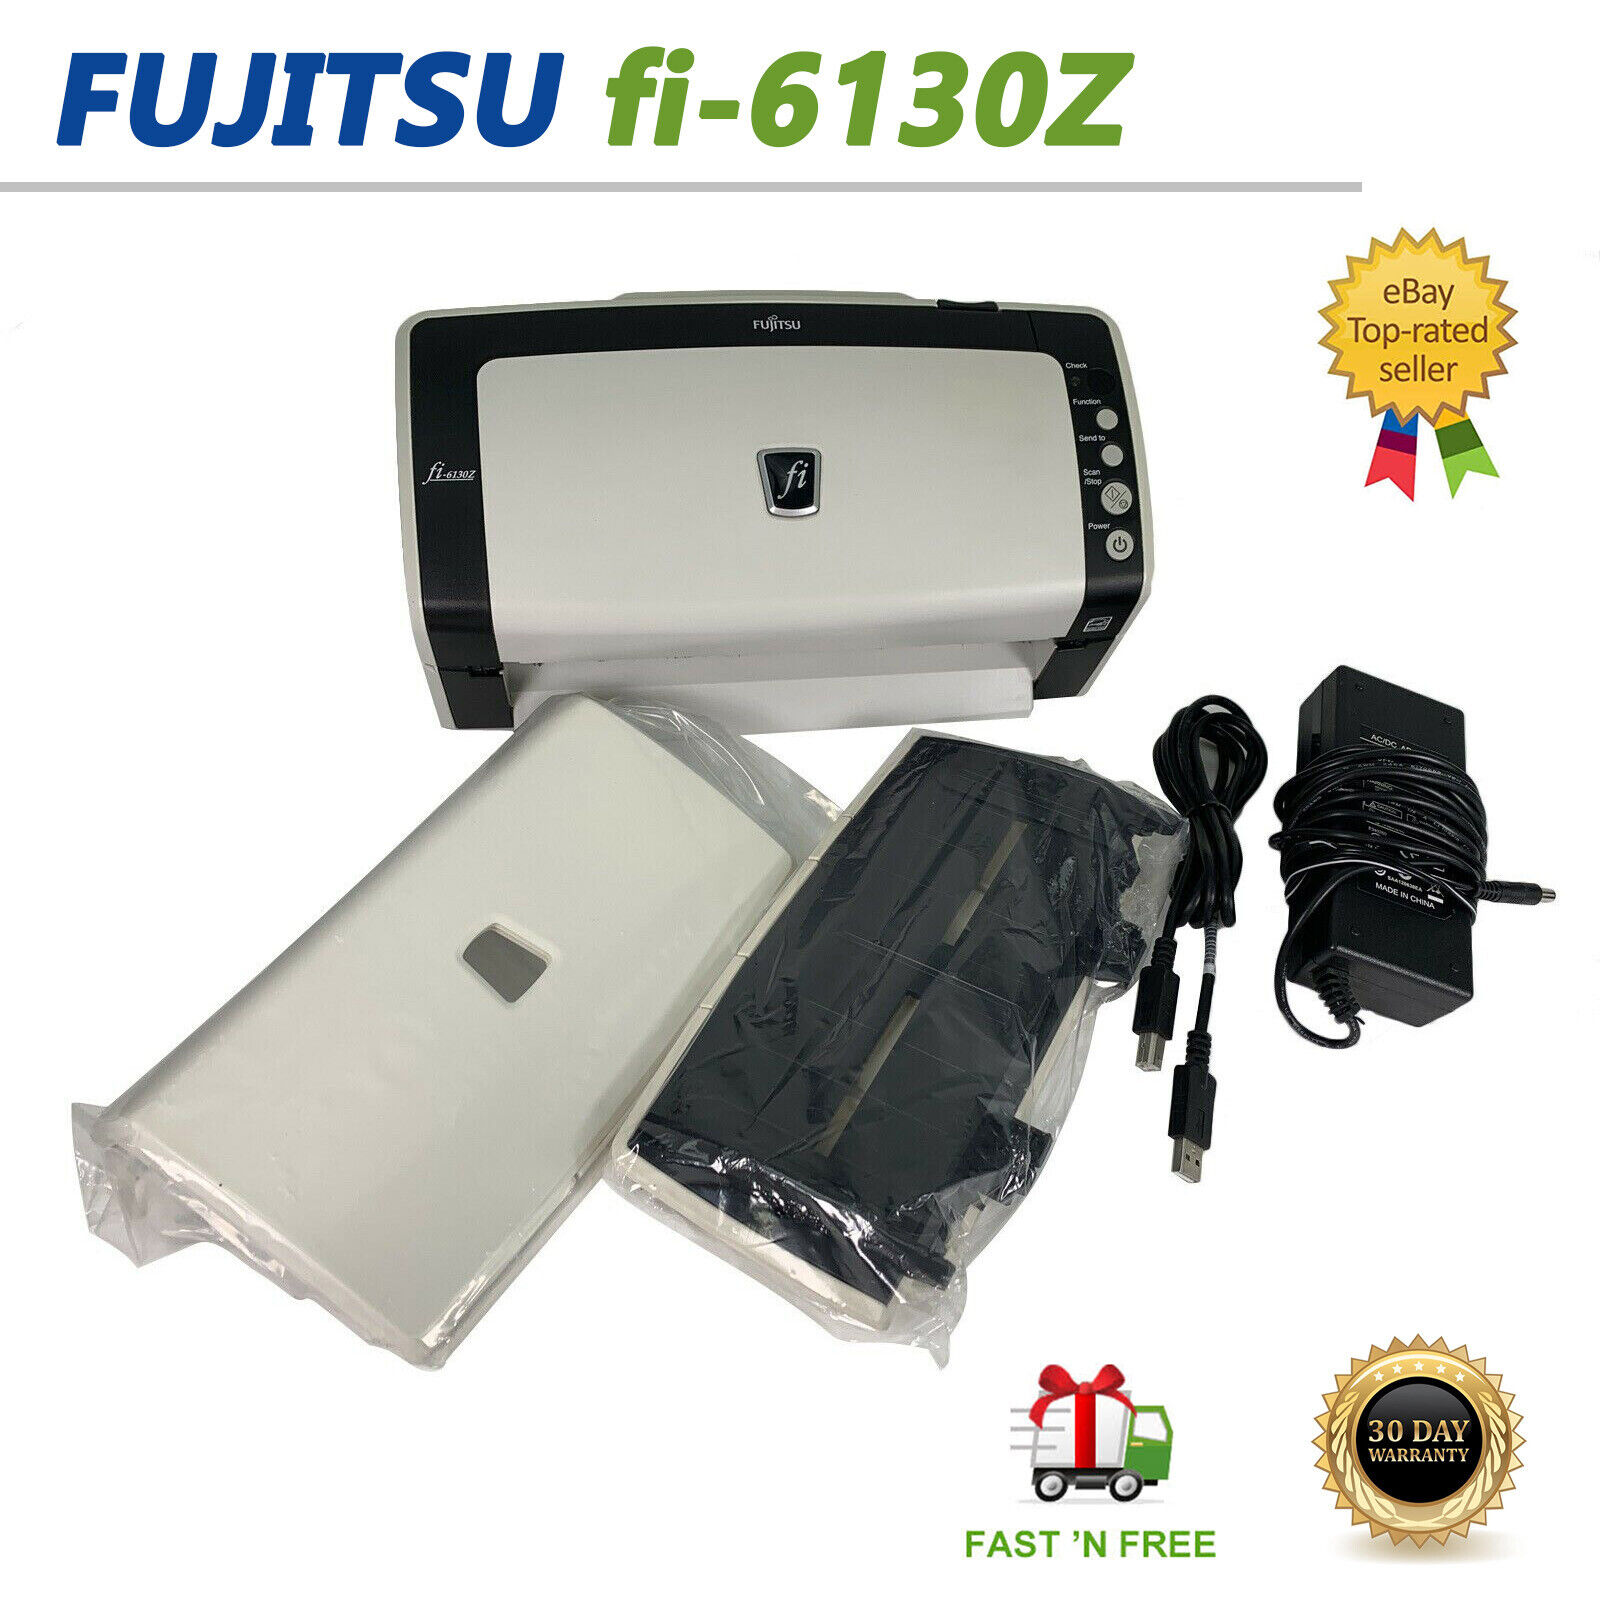 Fujitsu FI-6130Z ADF Duplex Document Color Scanner USB NEW Rollers Trays Adapter